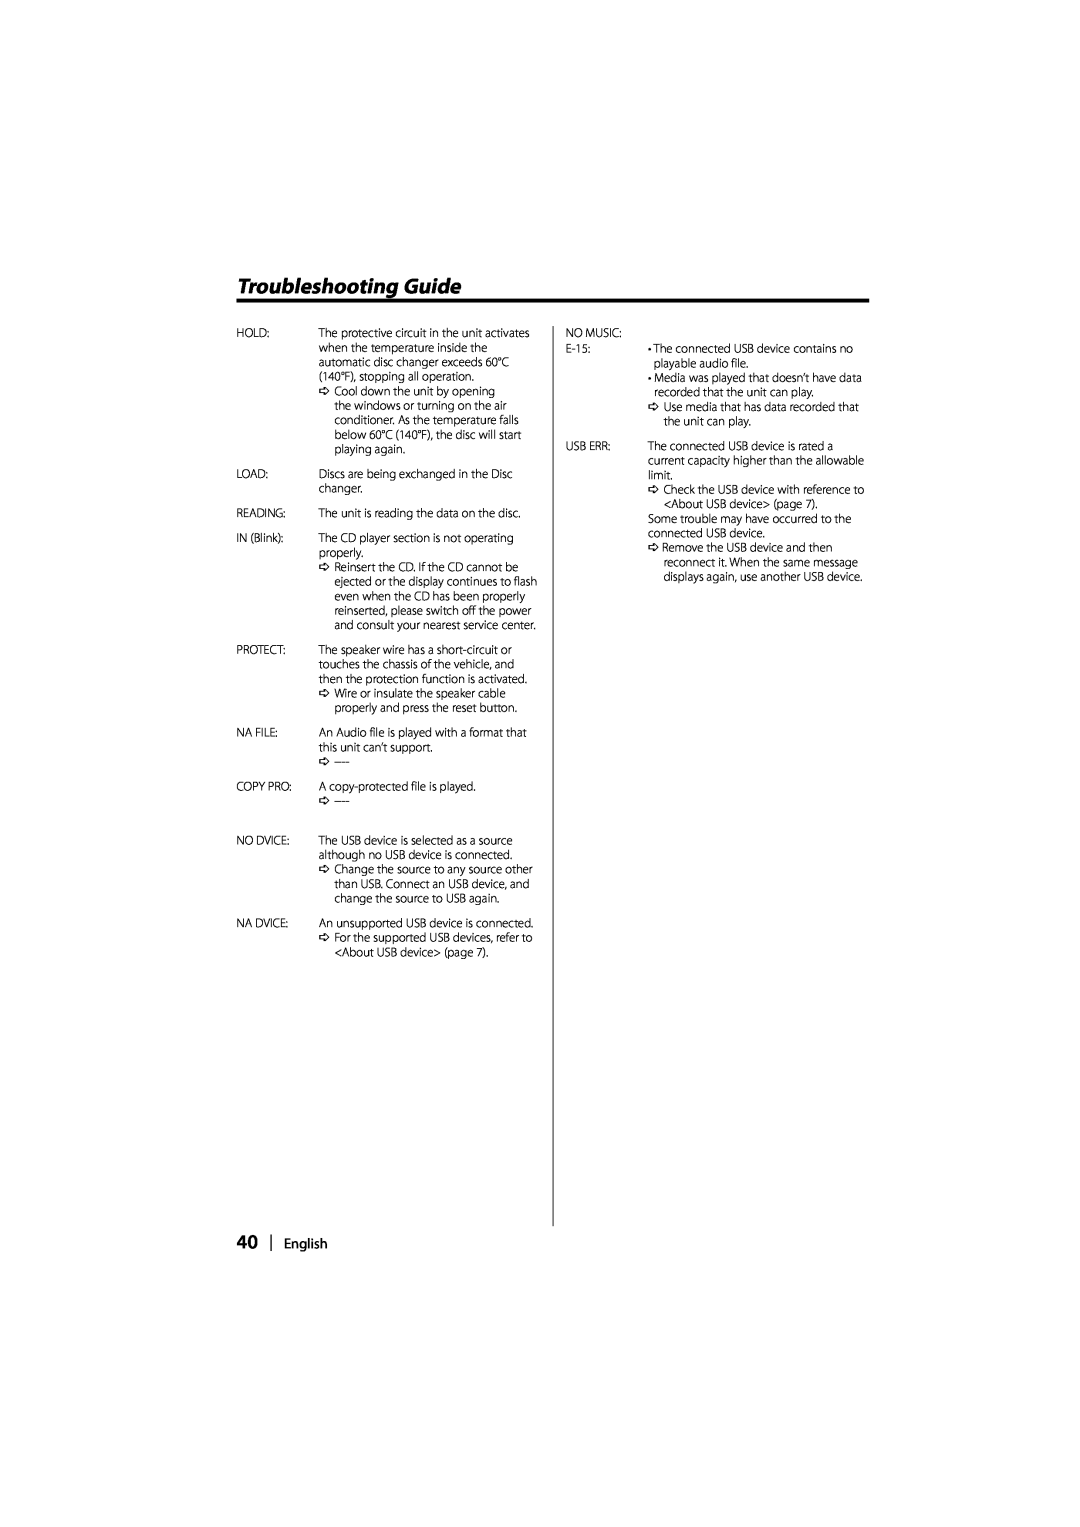 Kenwood DPX-MP2090U instruction manual Troubleshooting Guide, English 